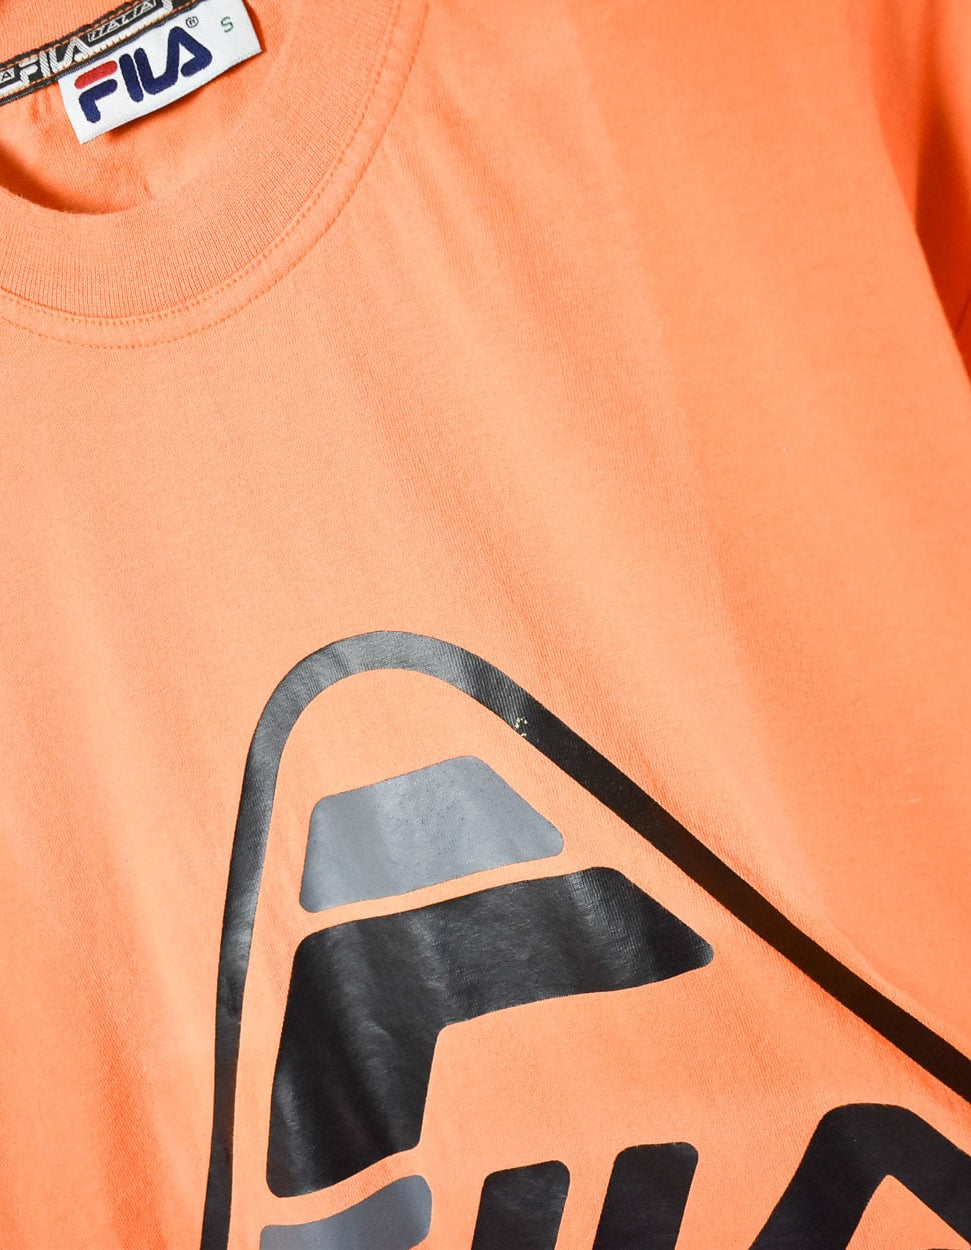 Orange Fila T-Shirt - Medium